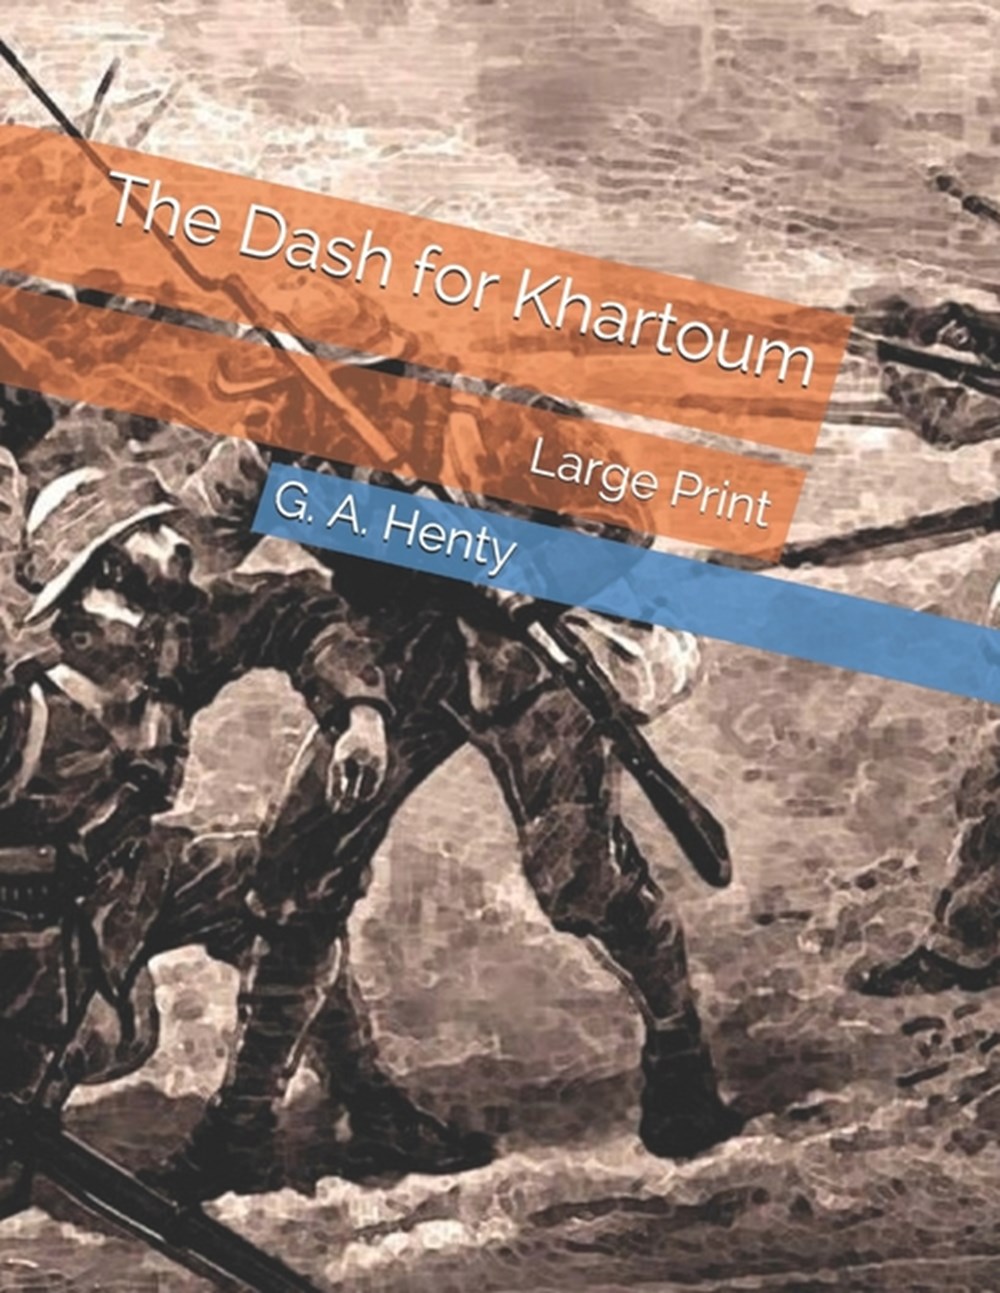 Dash for Khartoum: Large Print